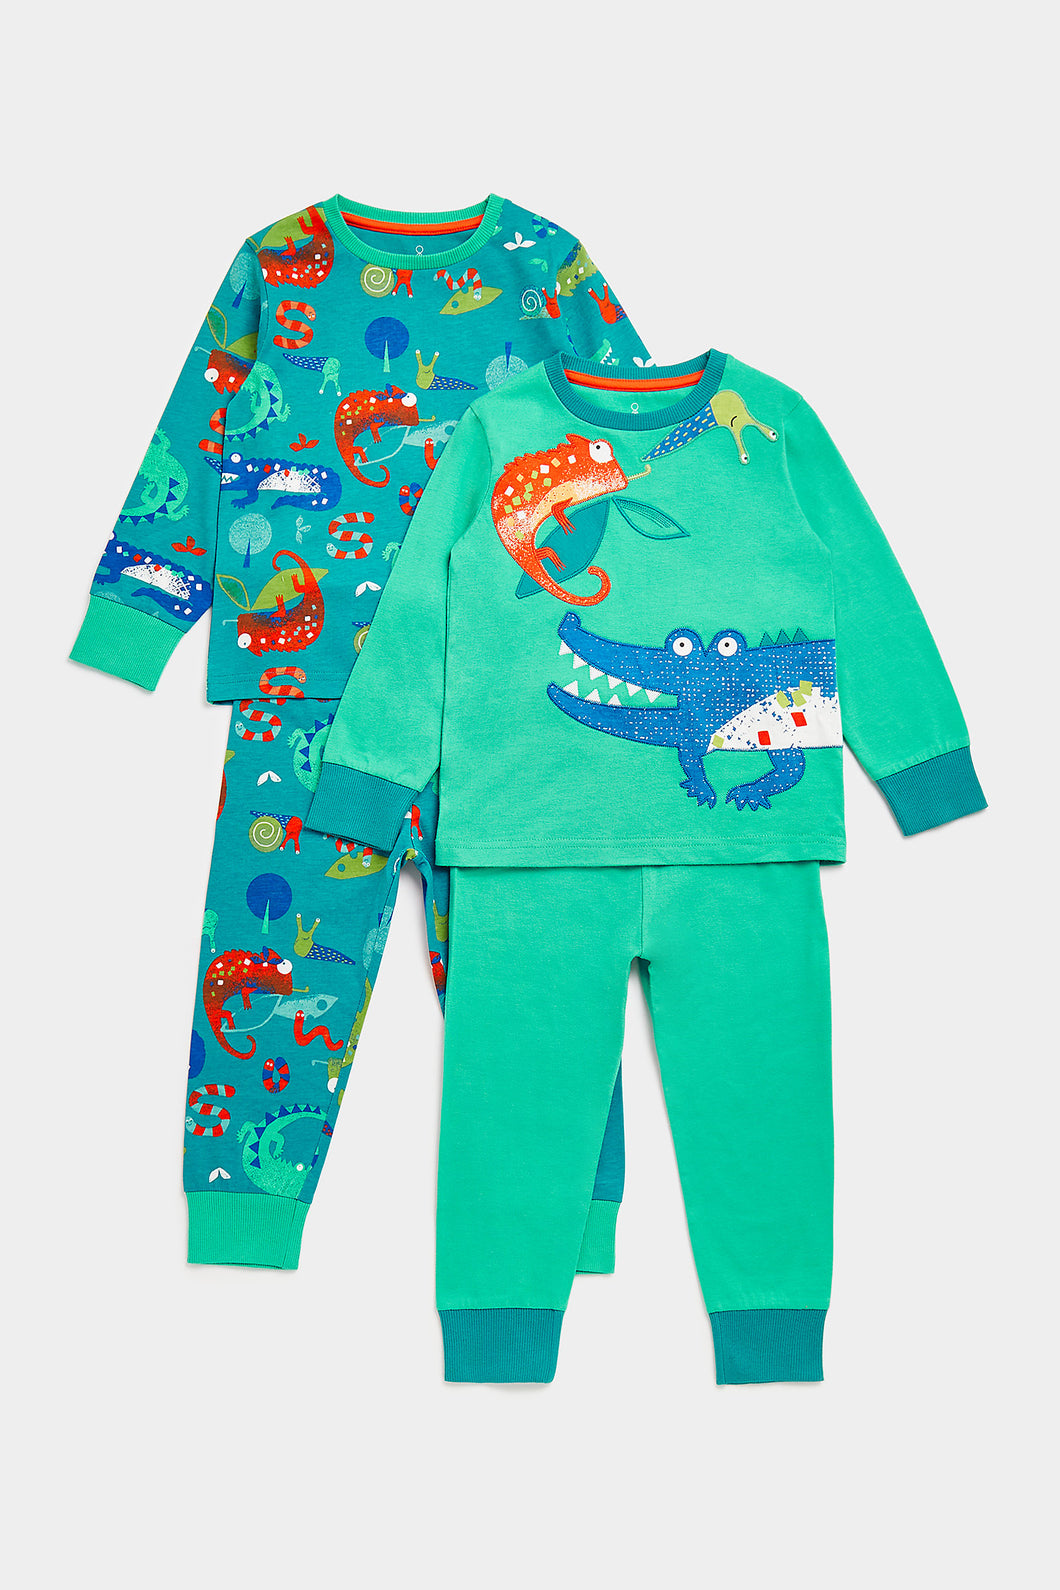 Mothercare Crocodile Pyjamas - 2 Pack